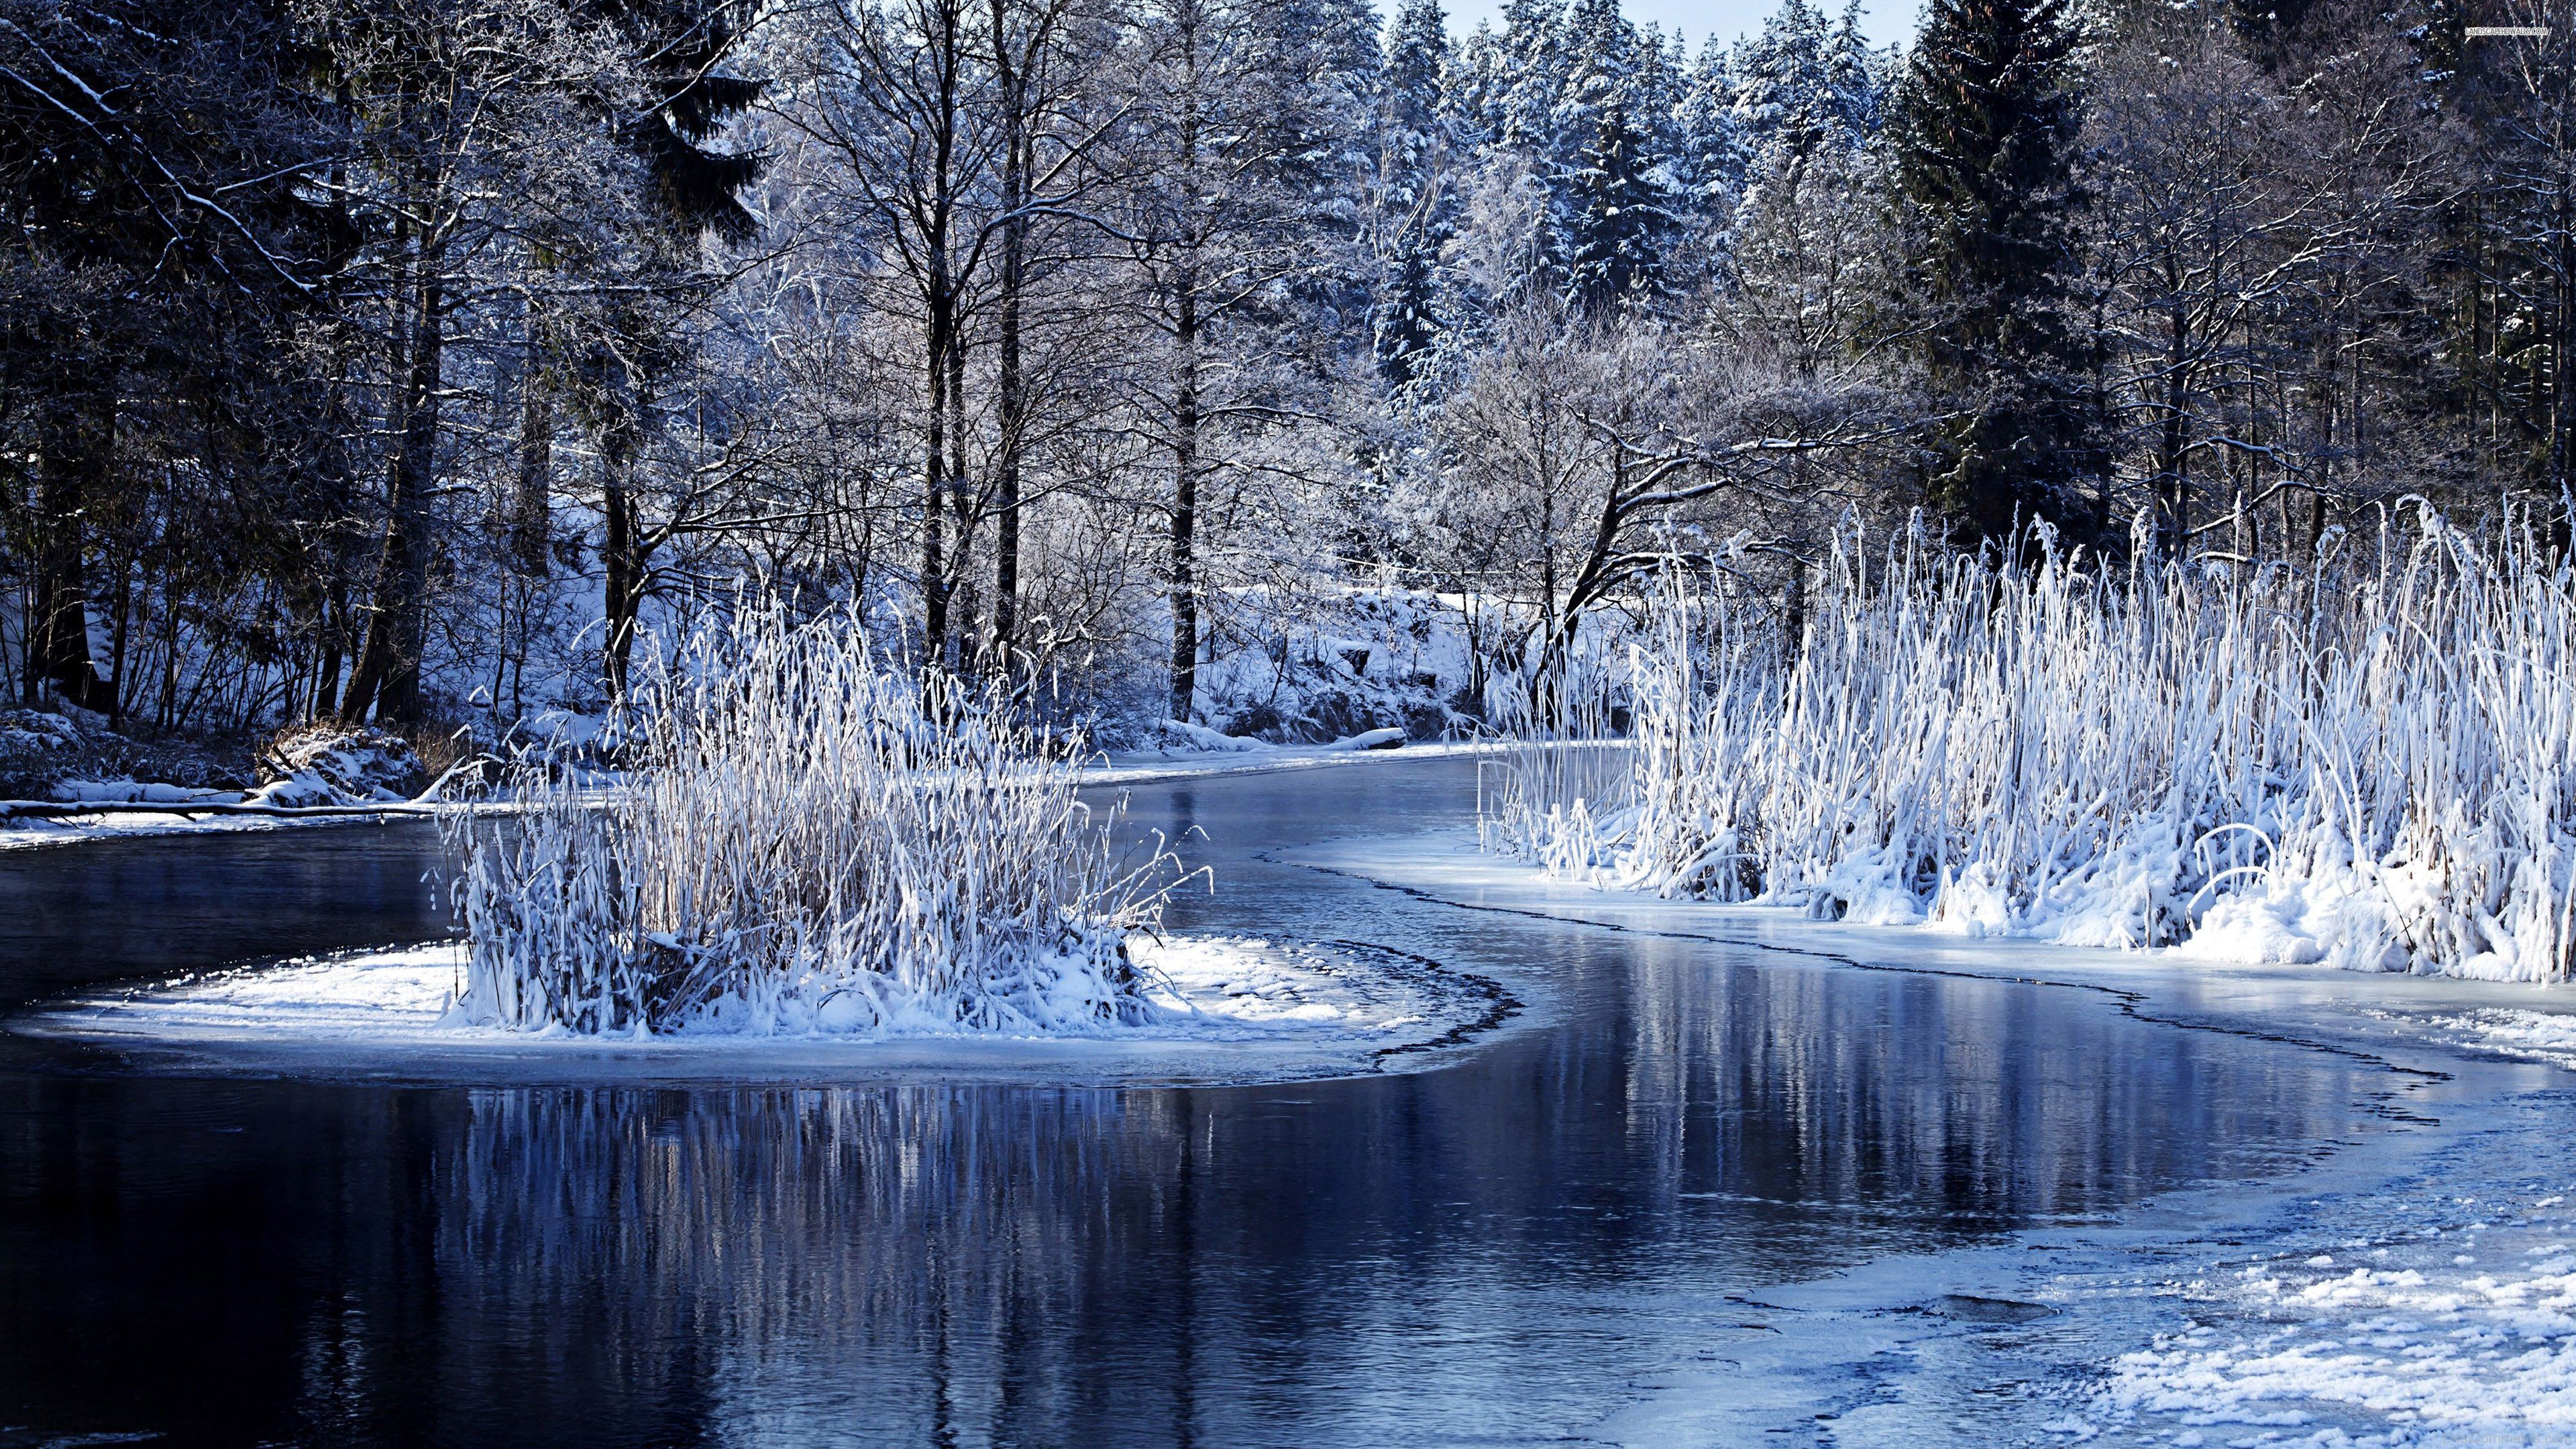 Winter Picture, Image, Photo